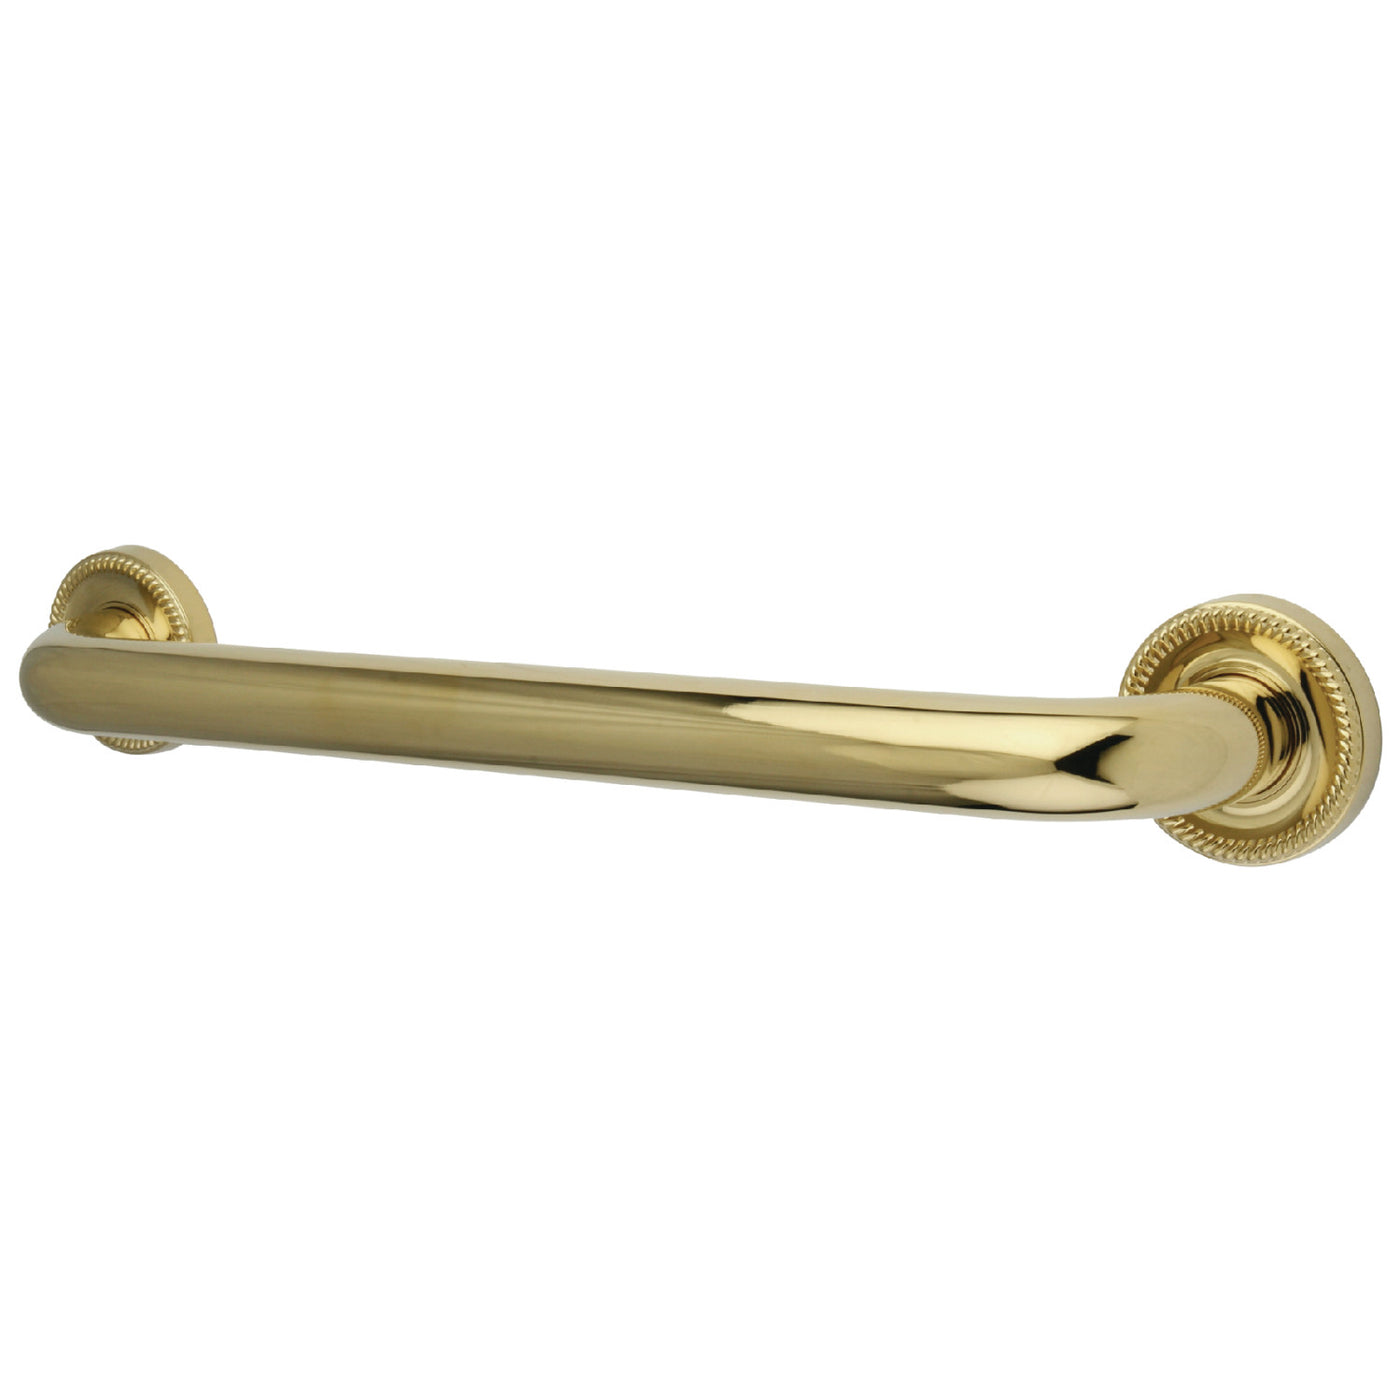 Elements of Design EDR914122 12-Inch x 1-1/4-Inch O.D Grab Bar, Polished Brass